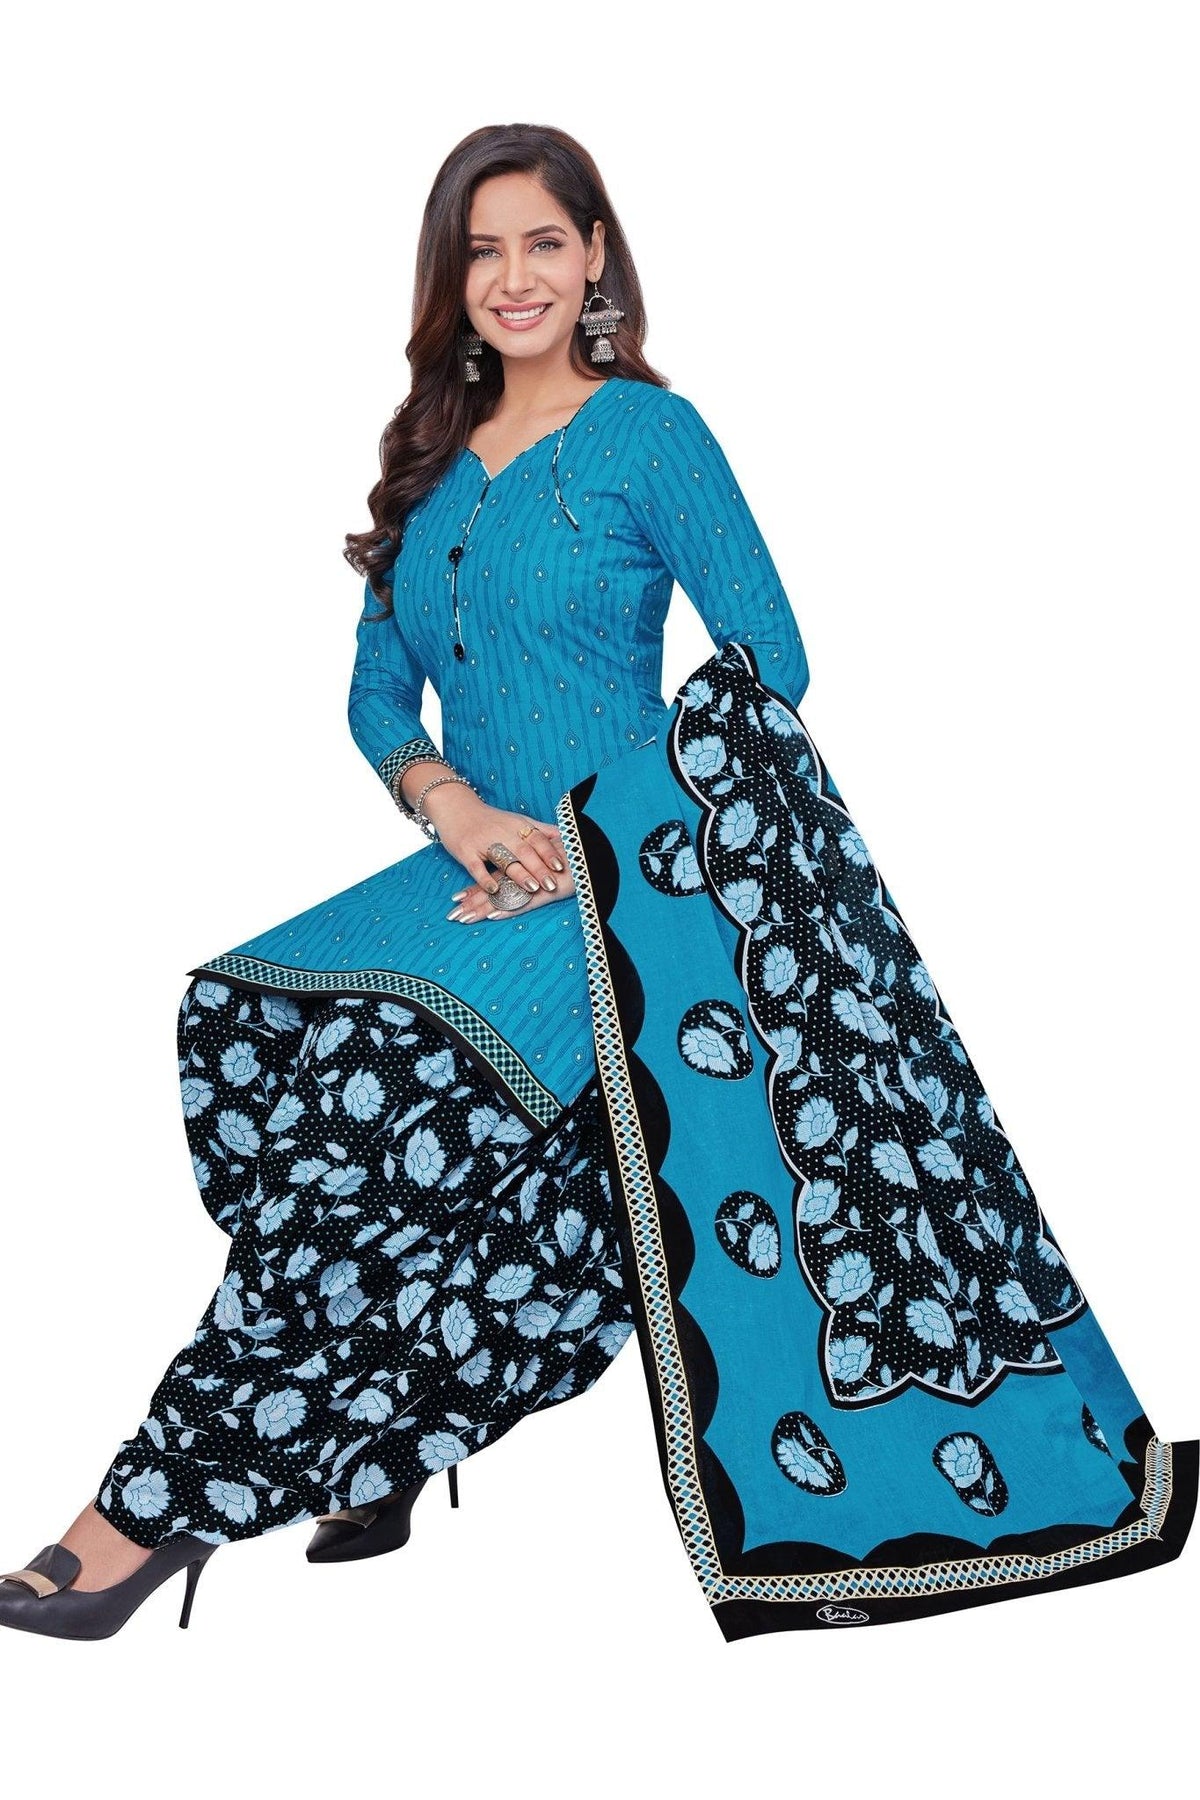 Rich Electric Blue Top with Blue Charcoal Bottom and Dupatta. Premium Cotton Patiyala Dress. - Bavis Clothing